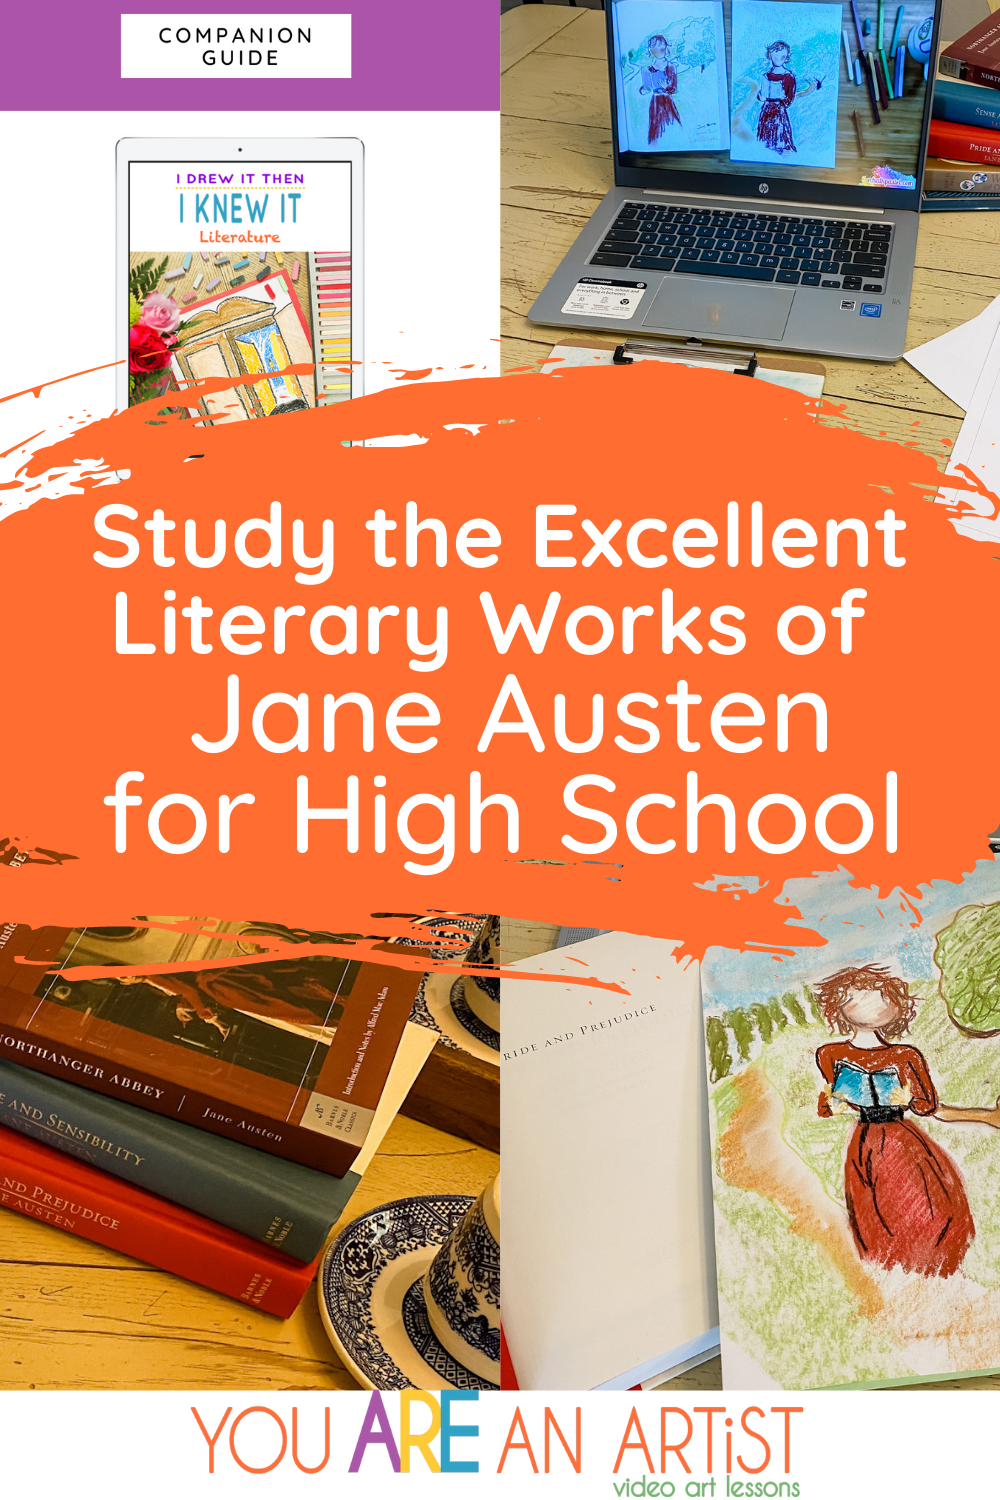 Jane Austen for High School